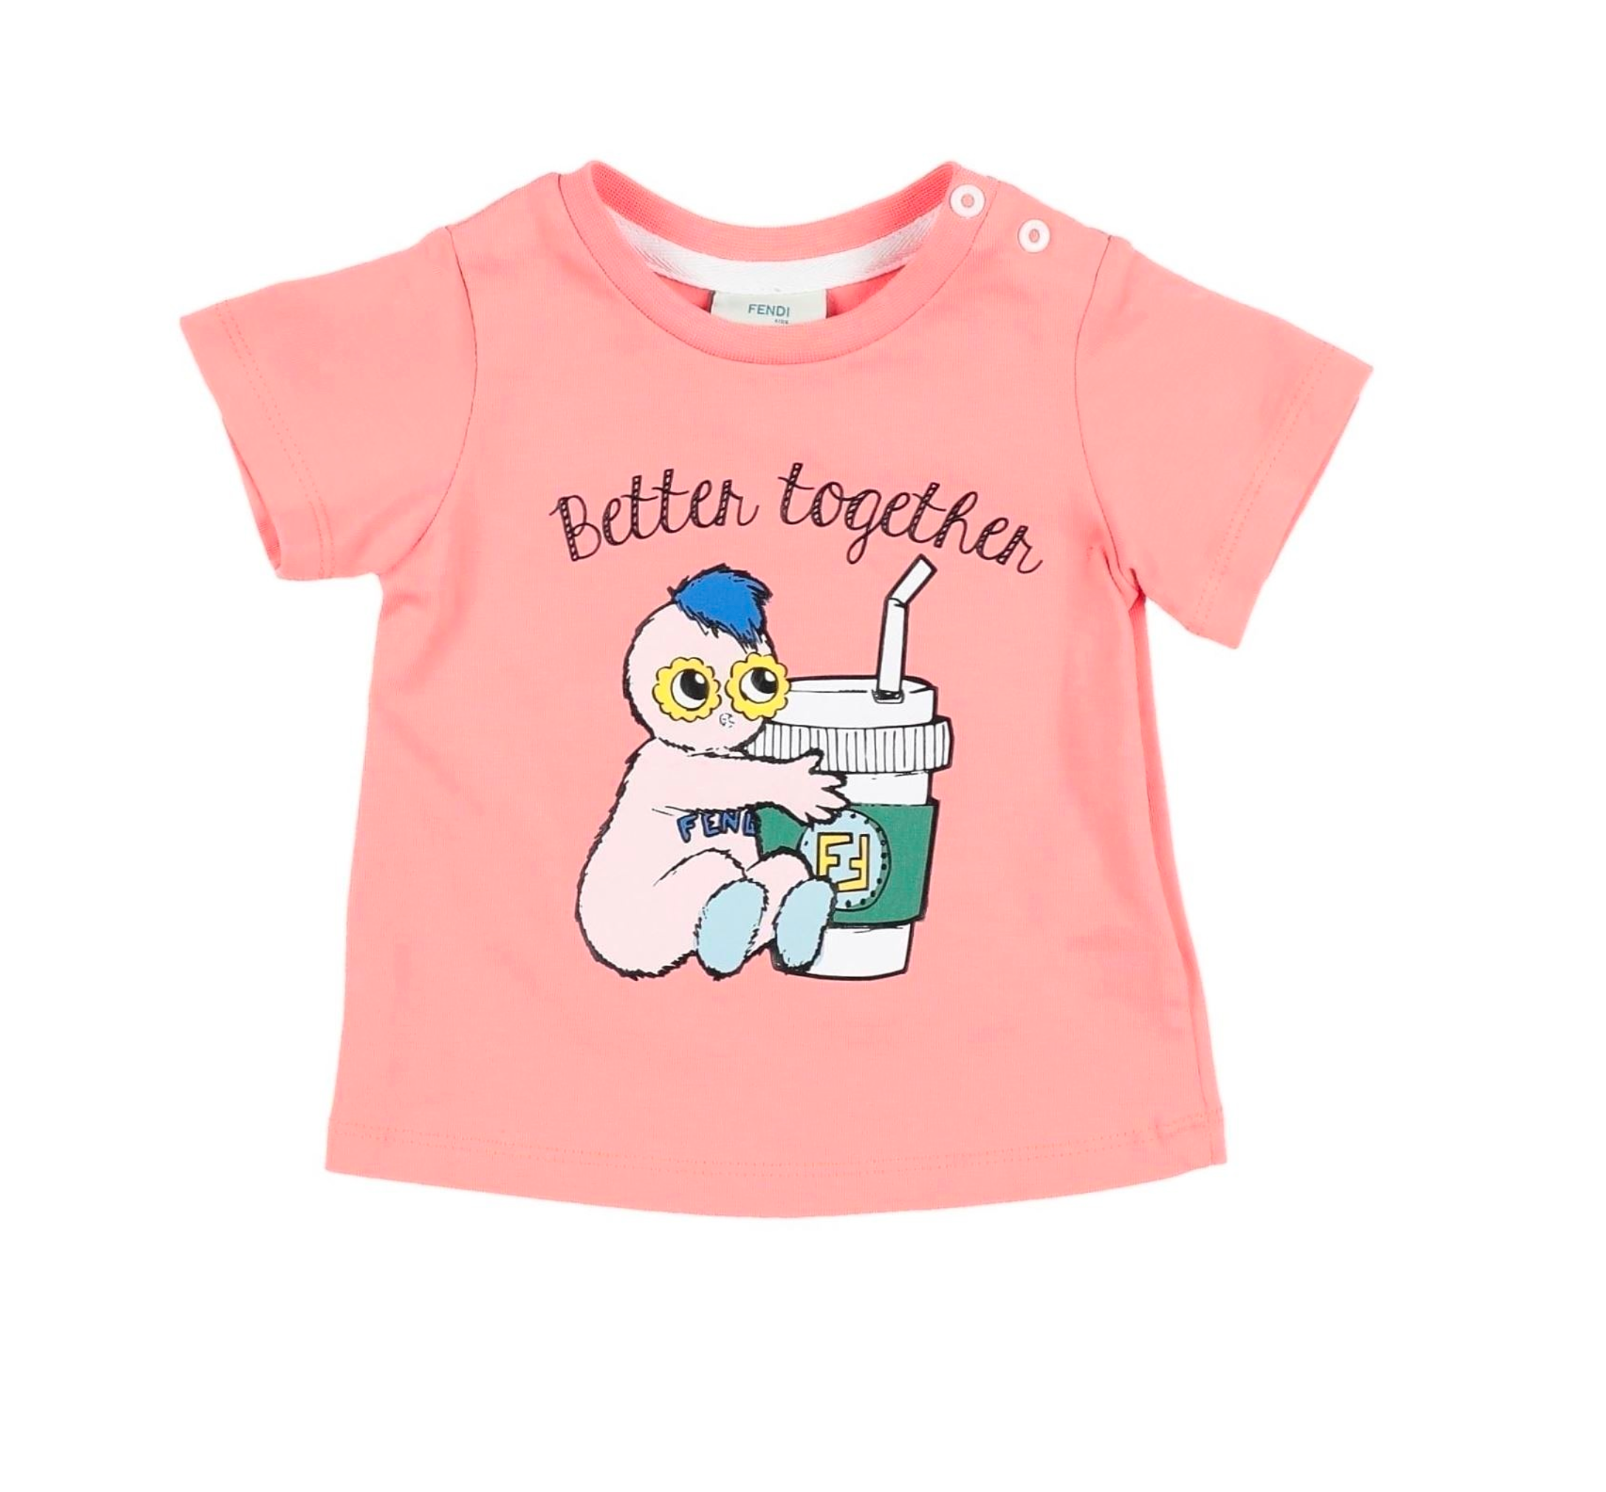 FENDI - "better together" T-shirt - 3 months